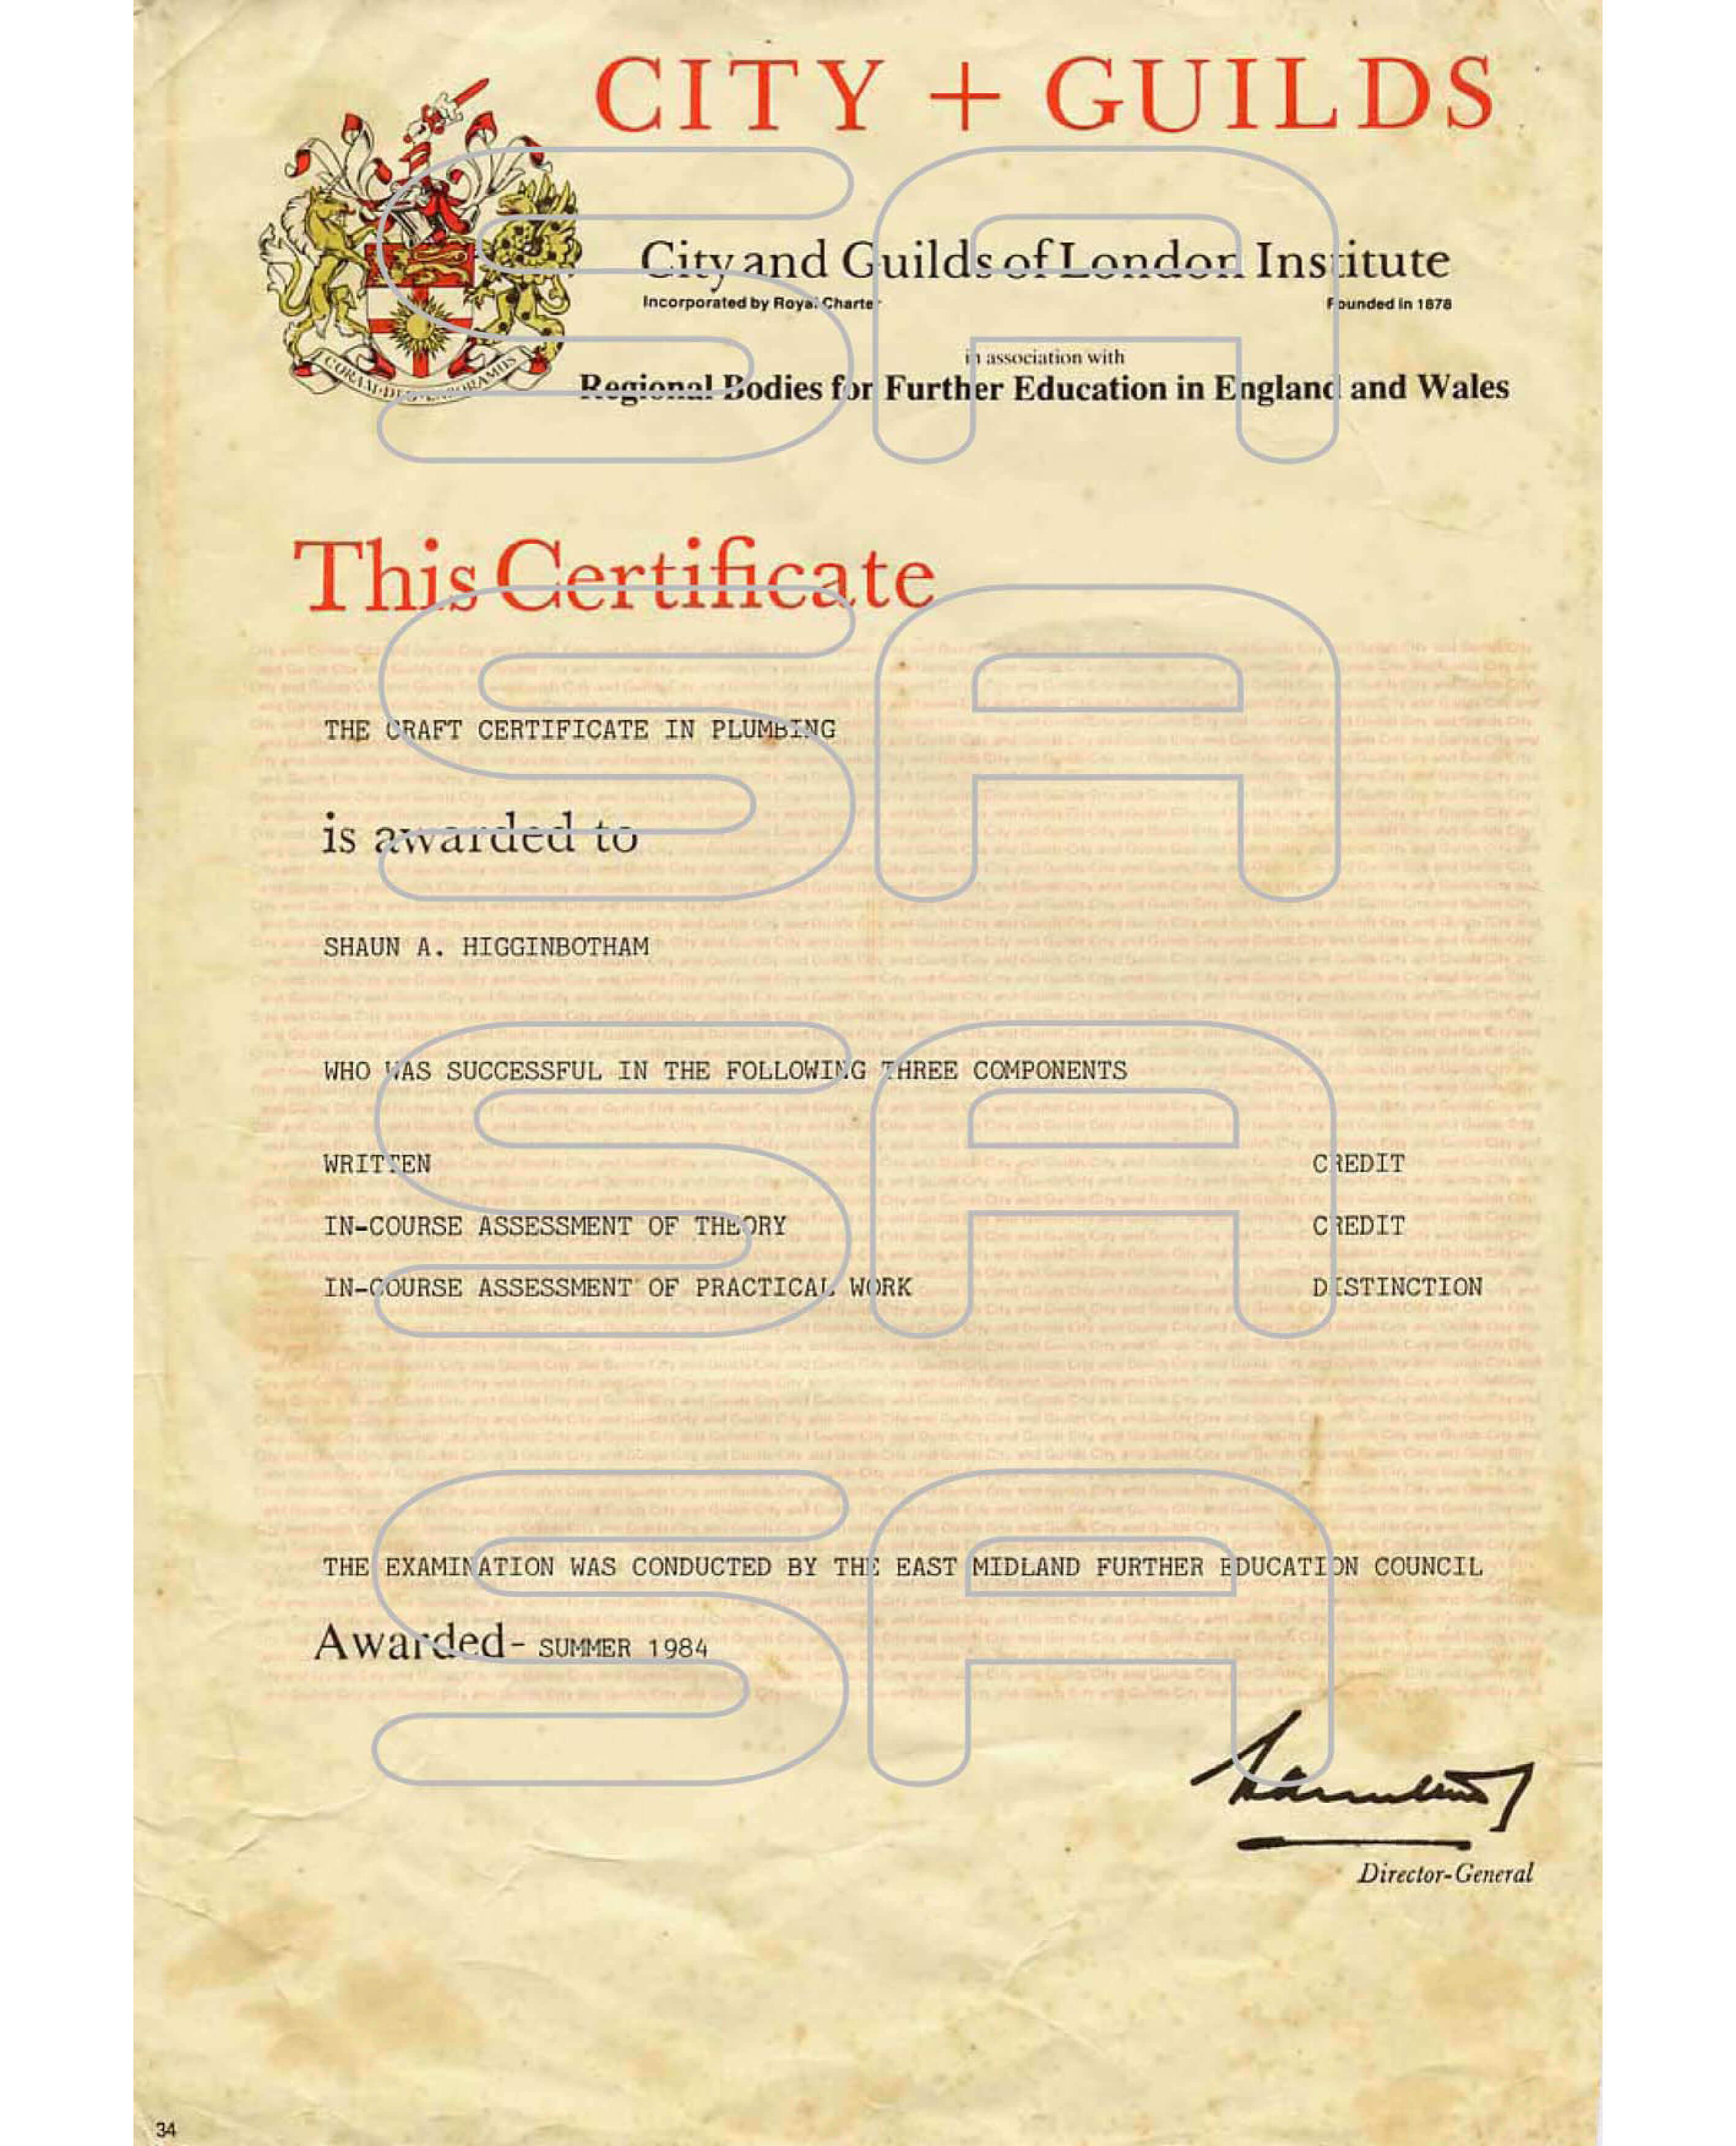  Gas Certificate